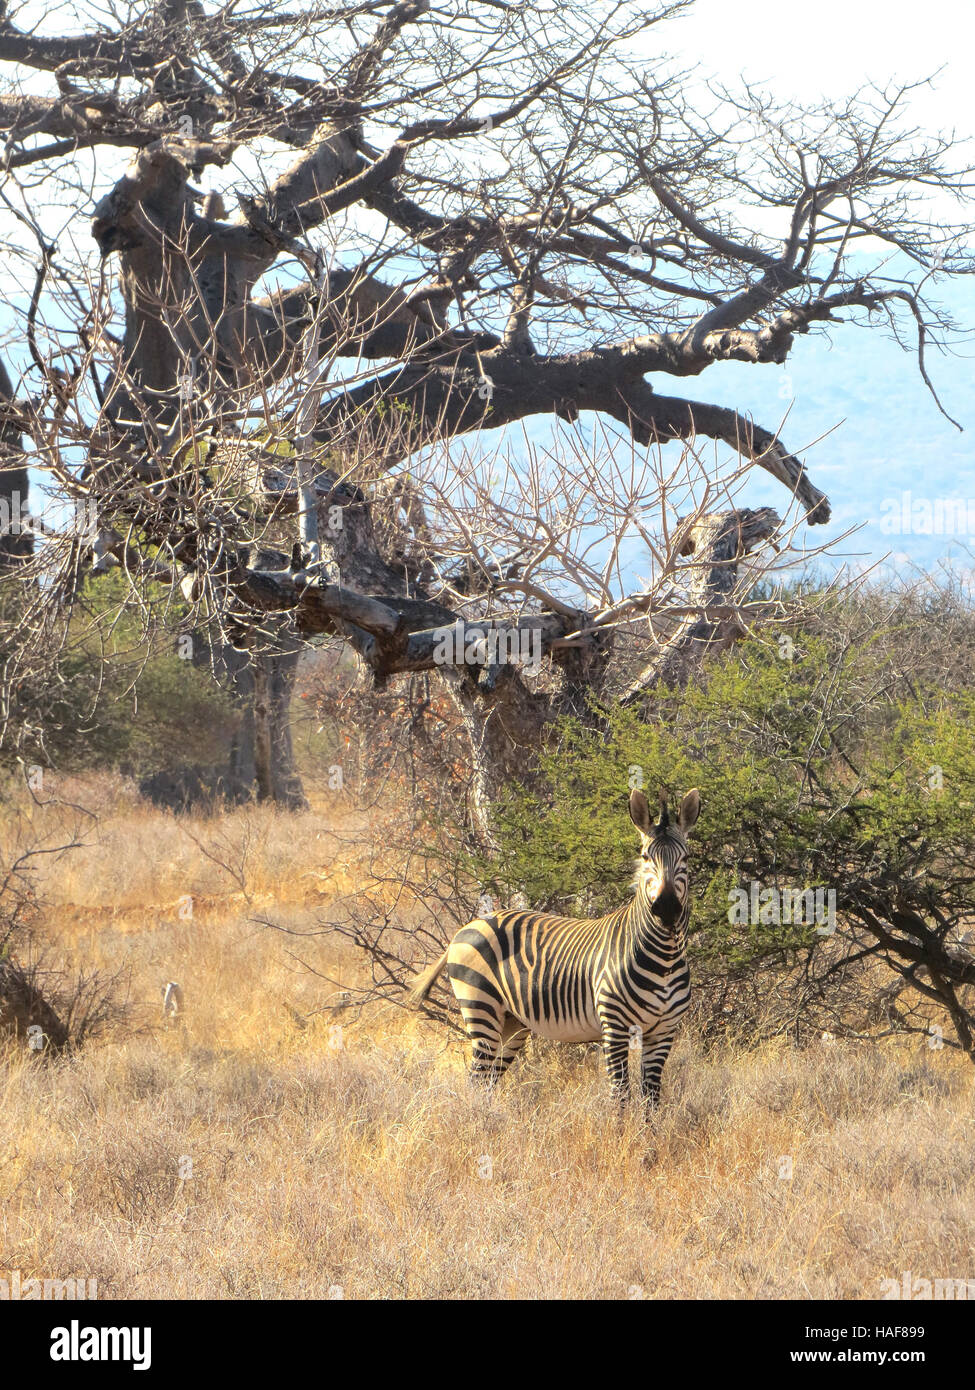 ZEBRA A Ebenen Zebra (Equus Quagga) vor einem Affenbrotbaum in Südafrika. Foto Tony Gale Stockfoto